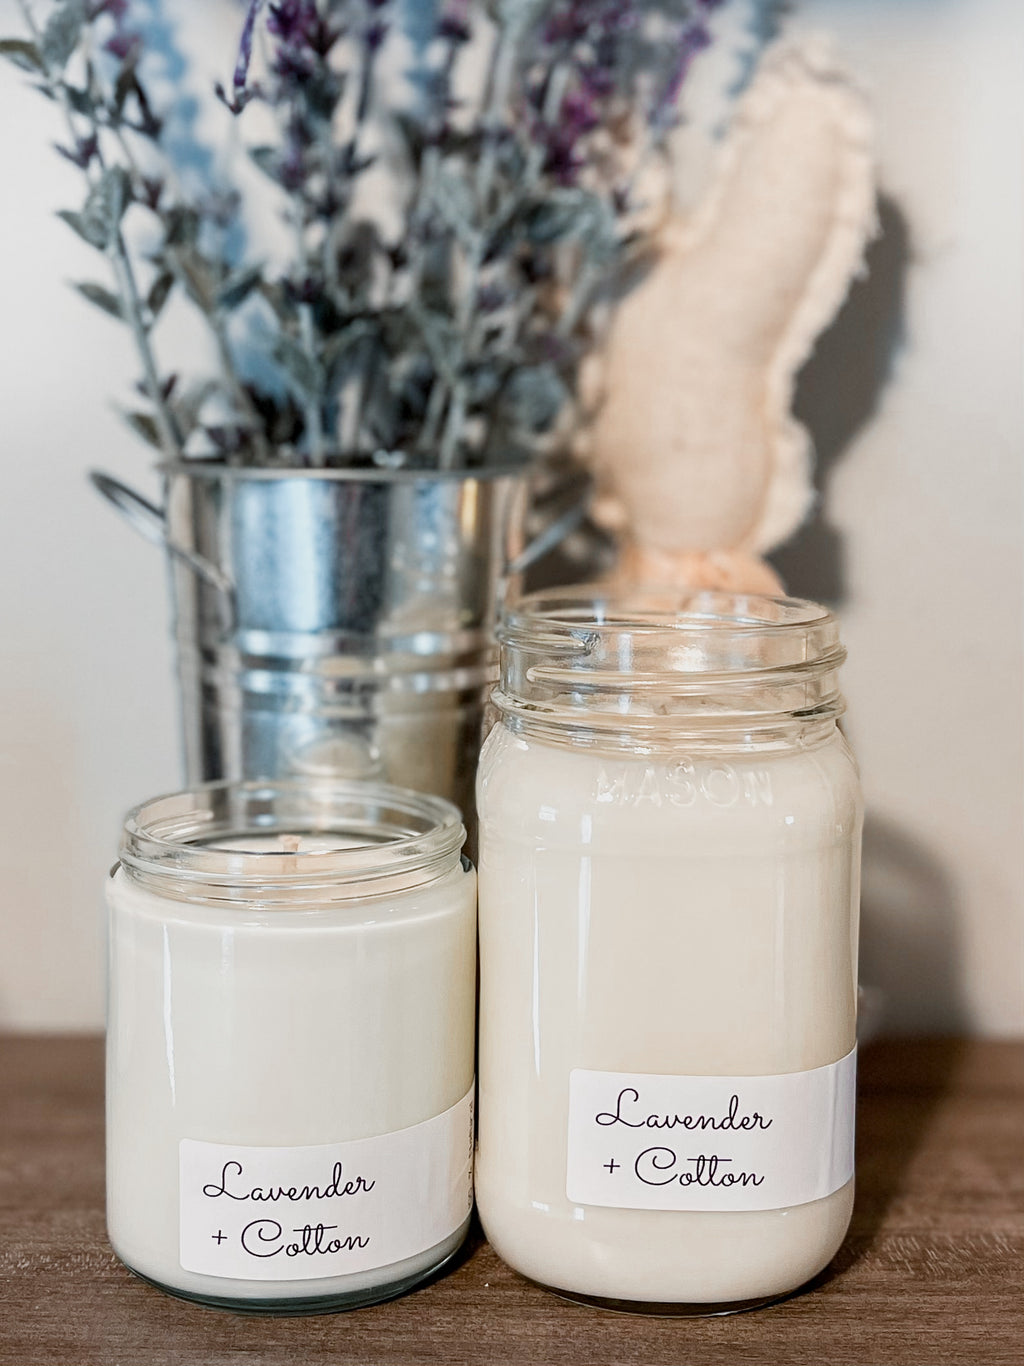 Lavender + Cotton Soy Candle